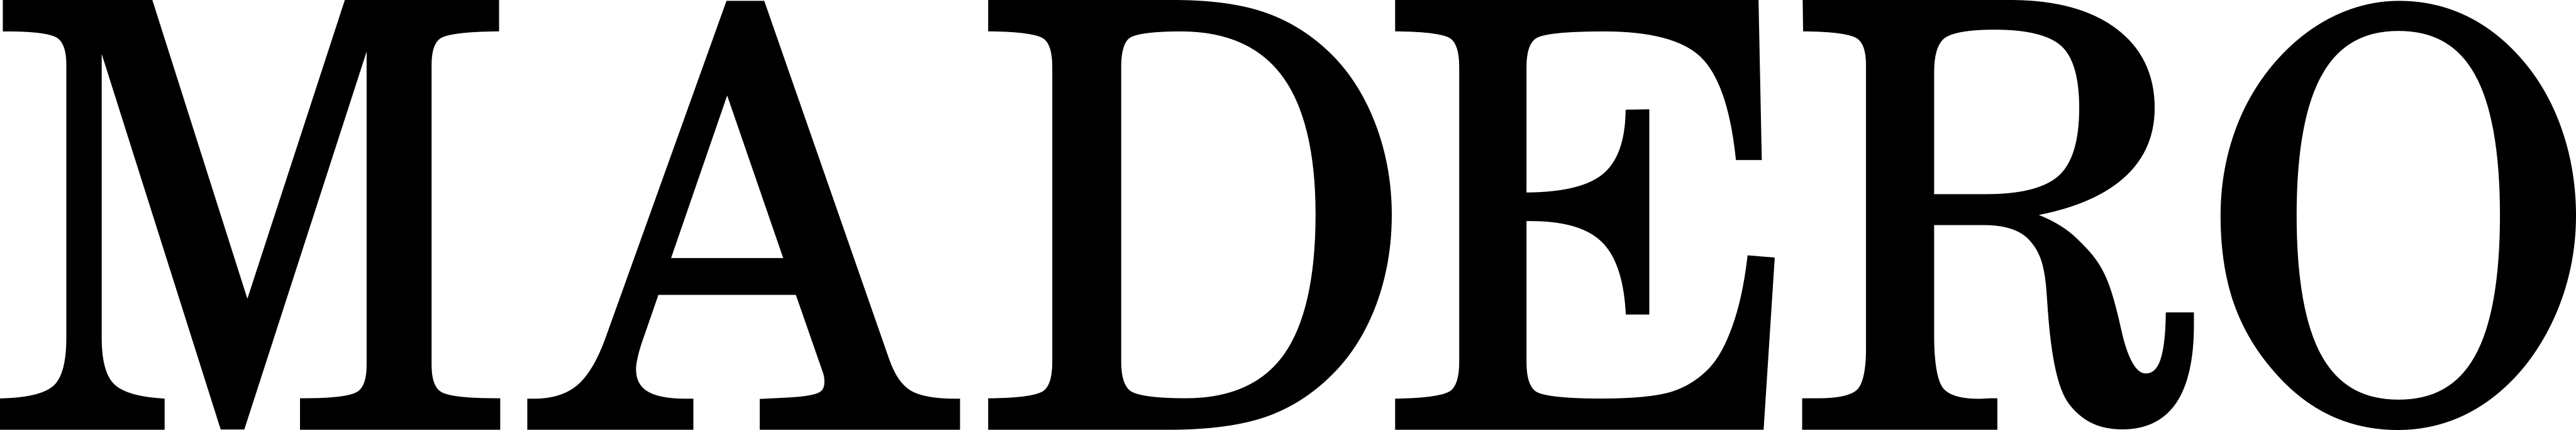 Madero Logo.